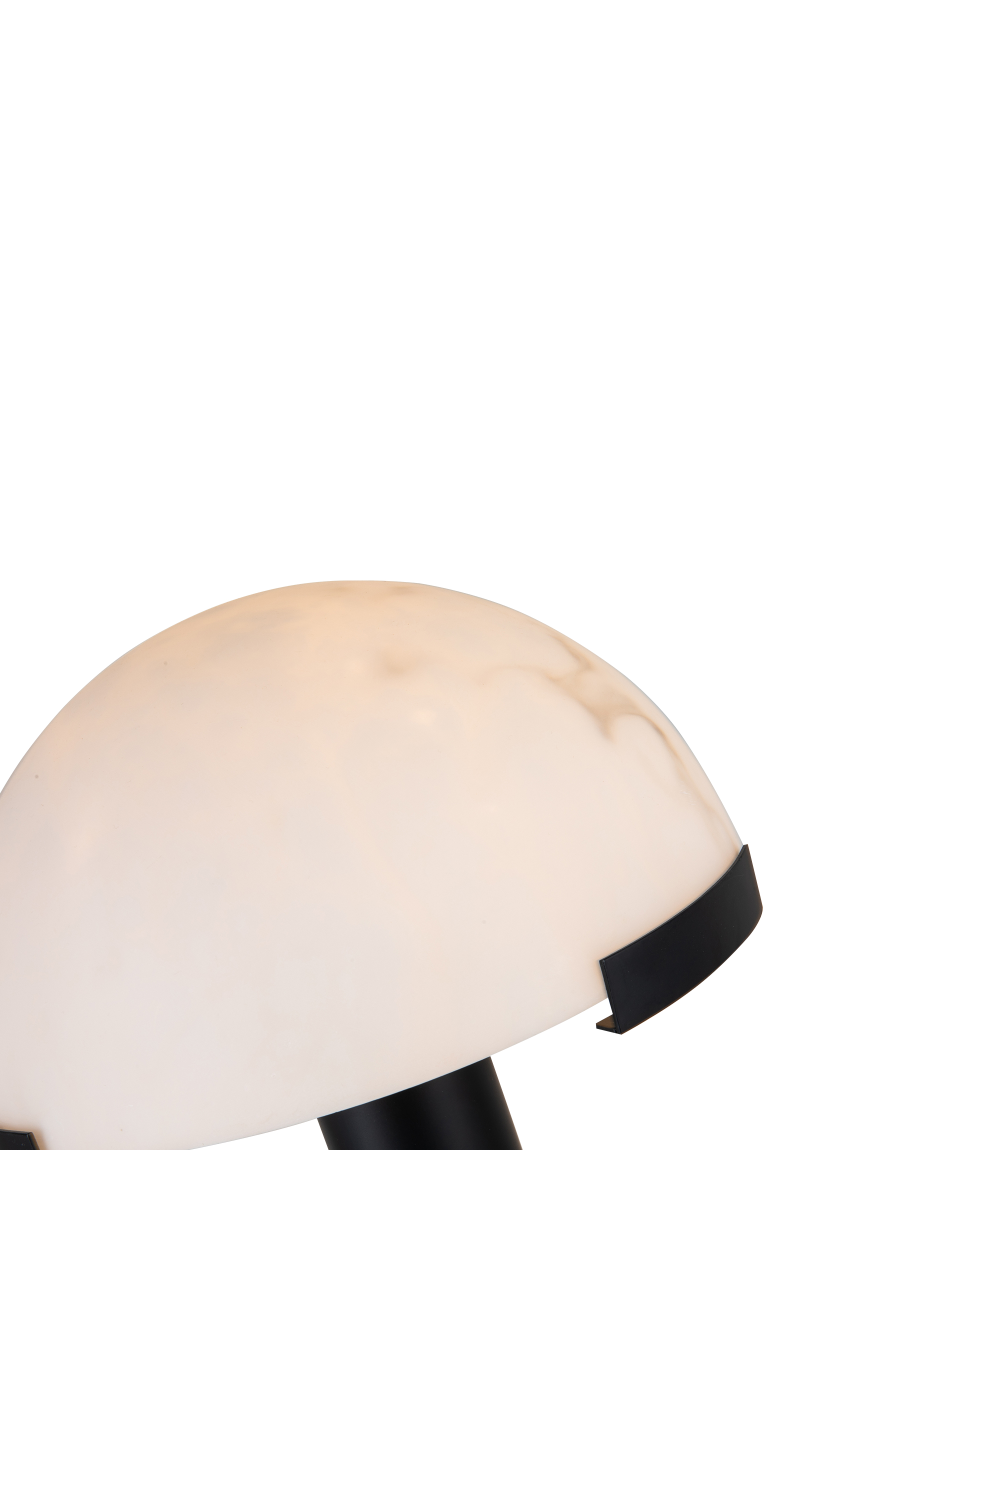 Black White Dome Table Lamp | Liang & Eimil Holmes | Oroa.com